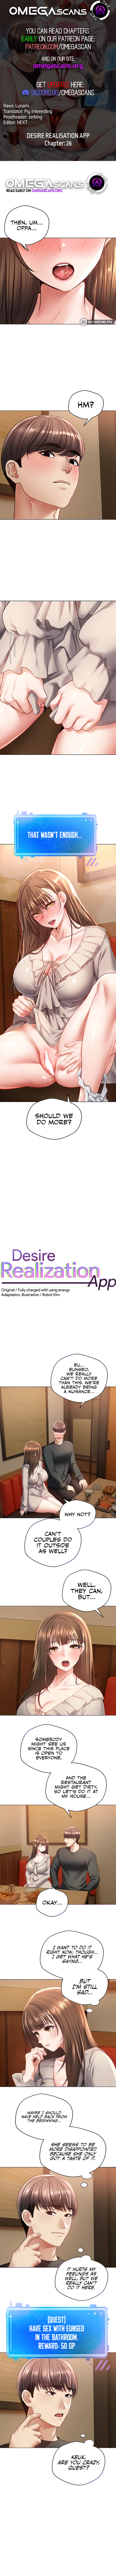 Desire Realization App image